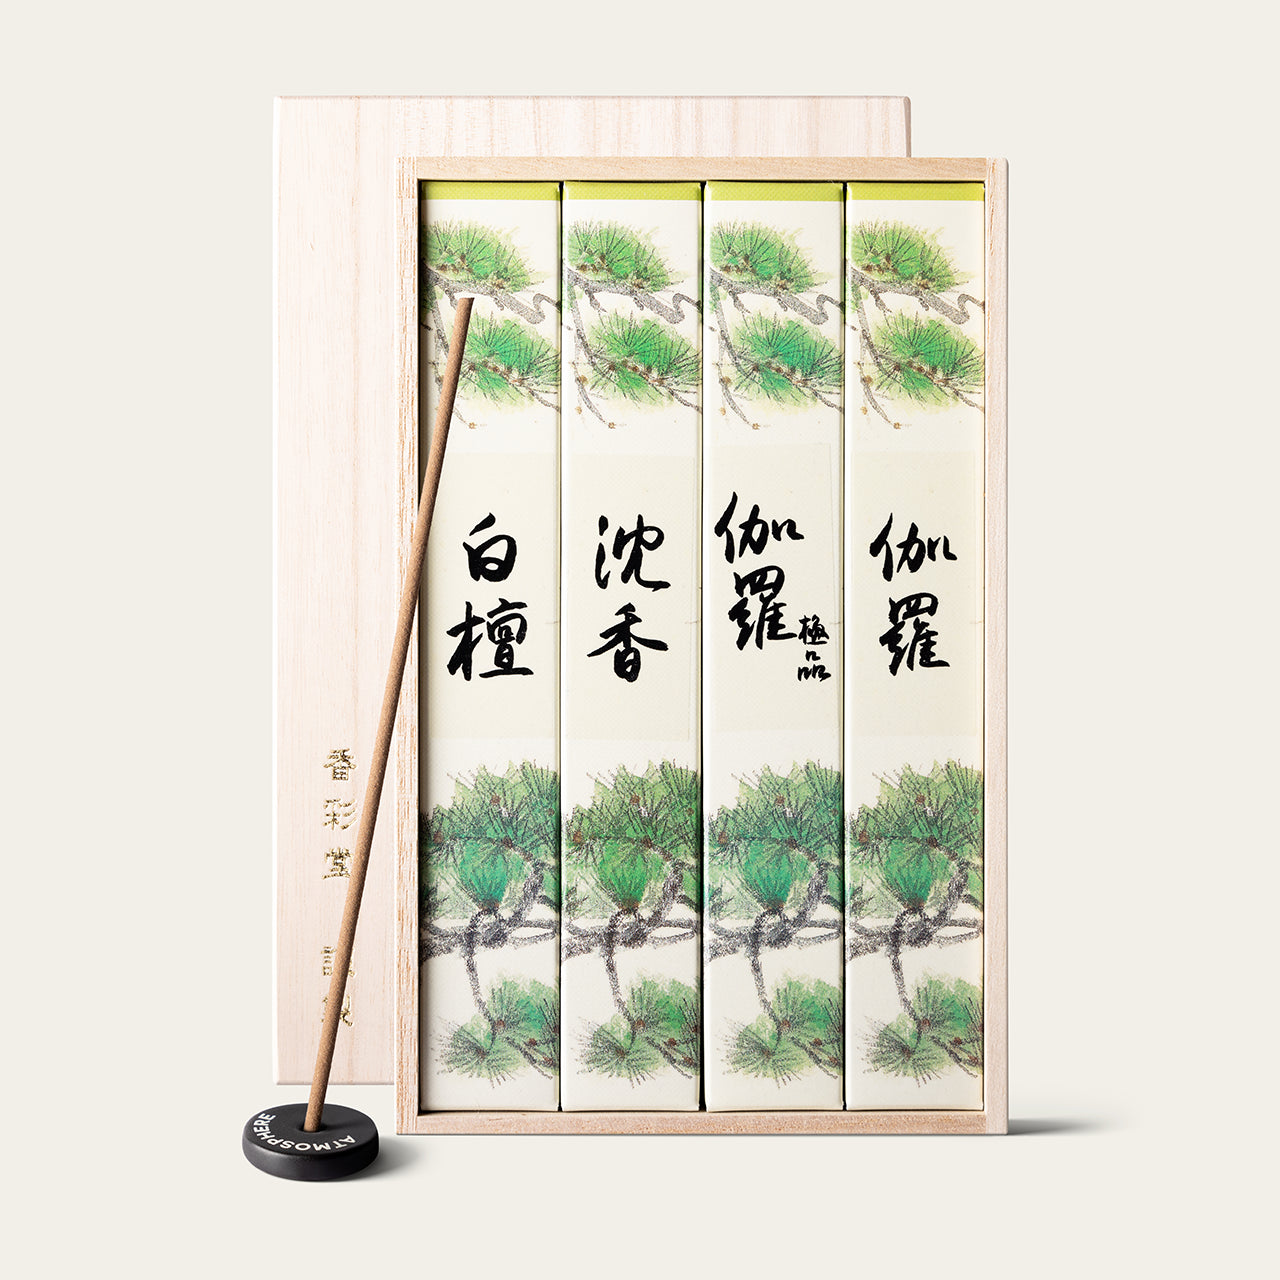 Kousaido Premium Supreme Set Japanese incense sticks (160 sticks) with Atmosphere ceramic incense holder